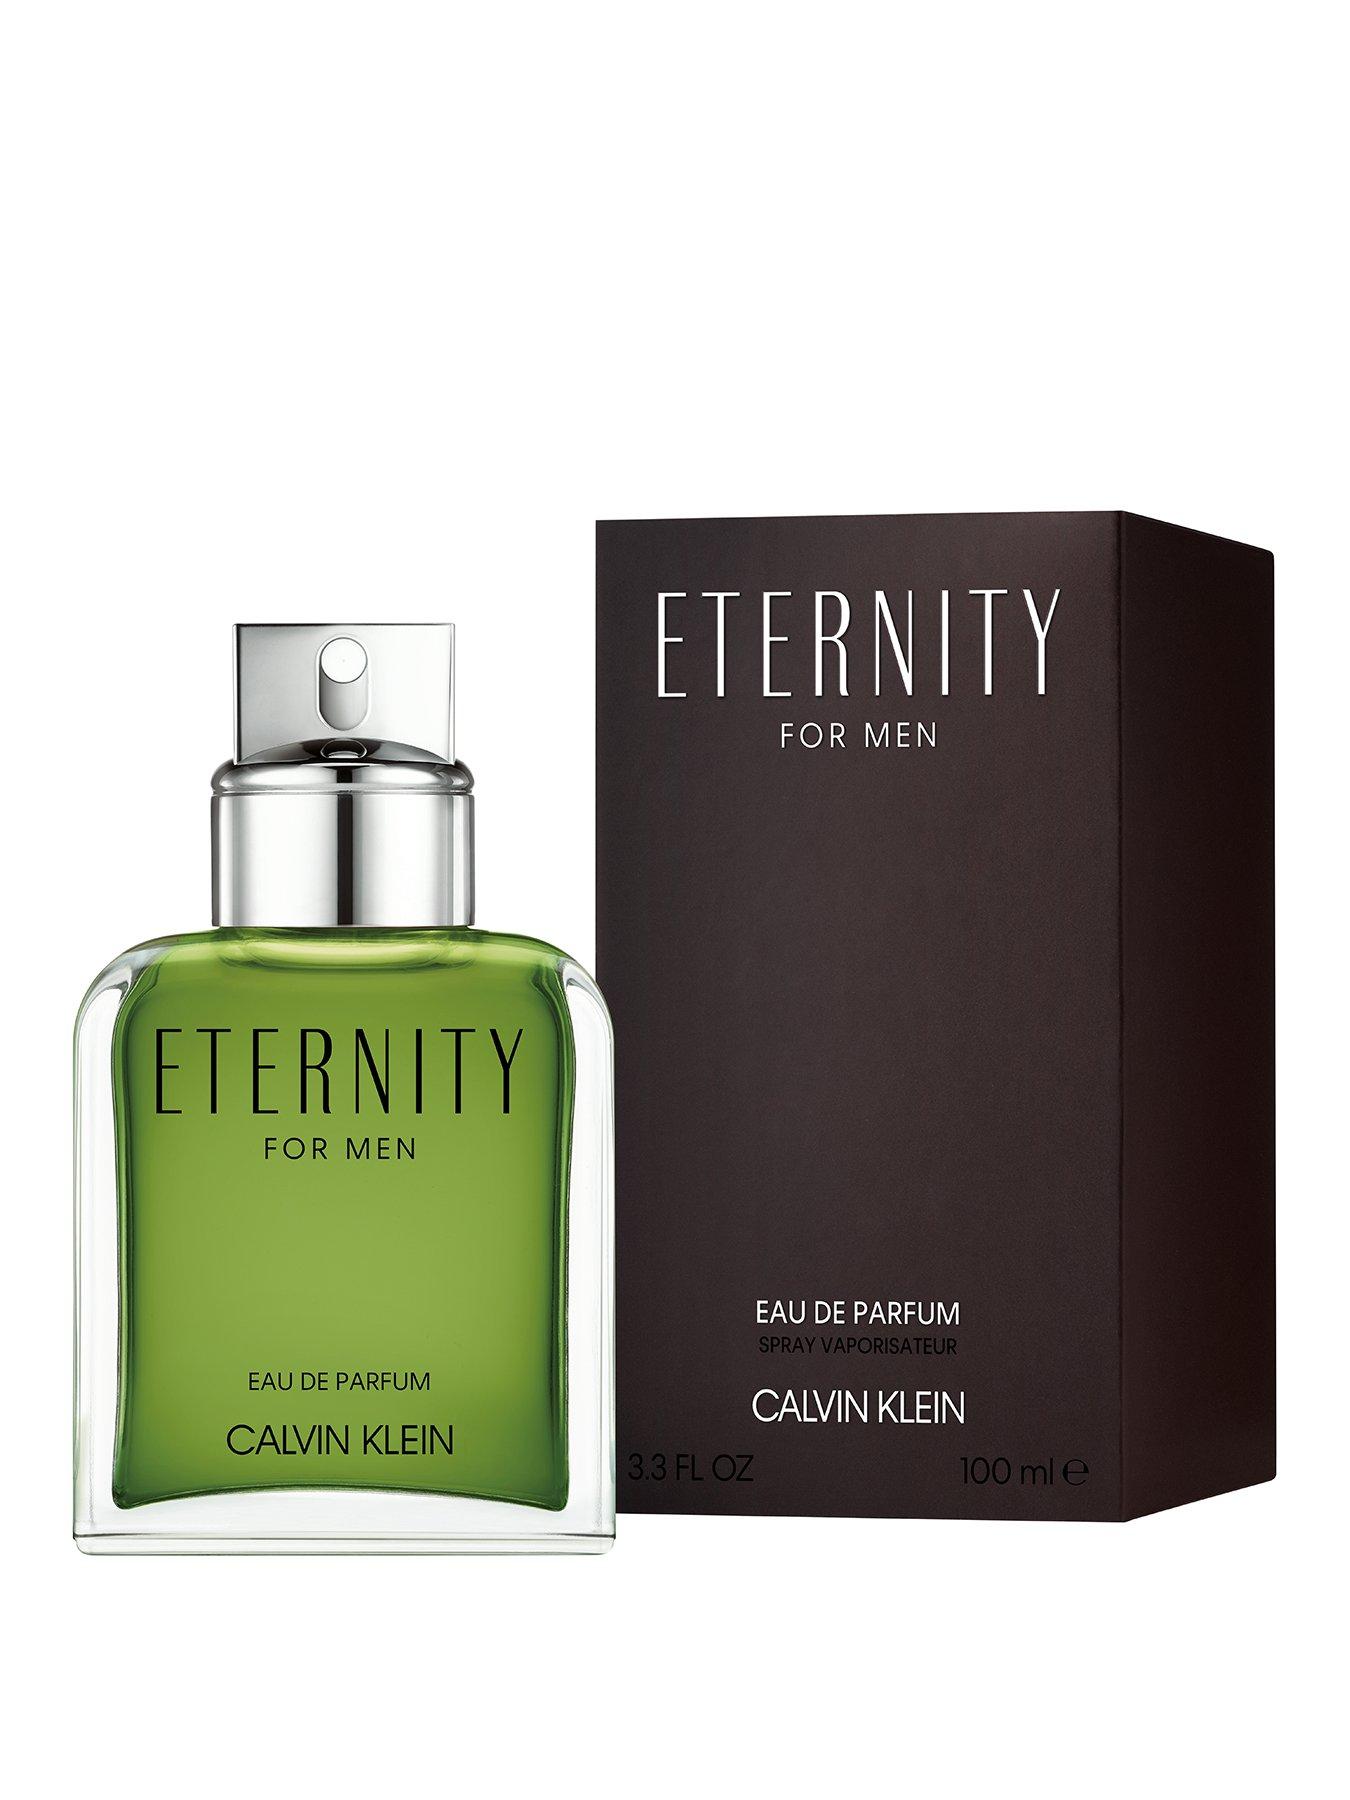 Belofte keuken Expertise Calvin Klein Eternity For Men 100ml Eau de Parfum | very.co.uk